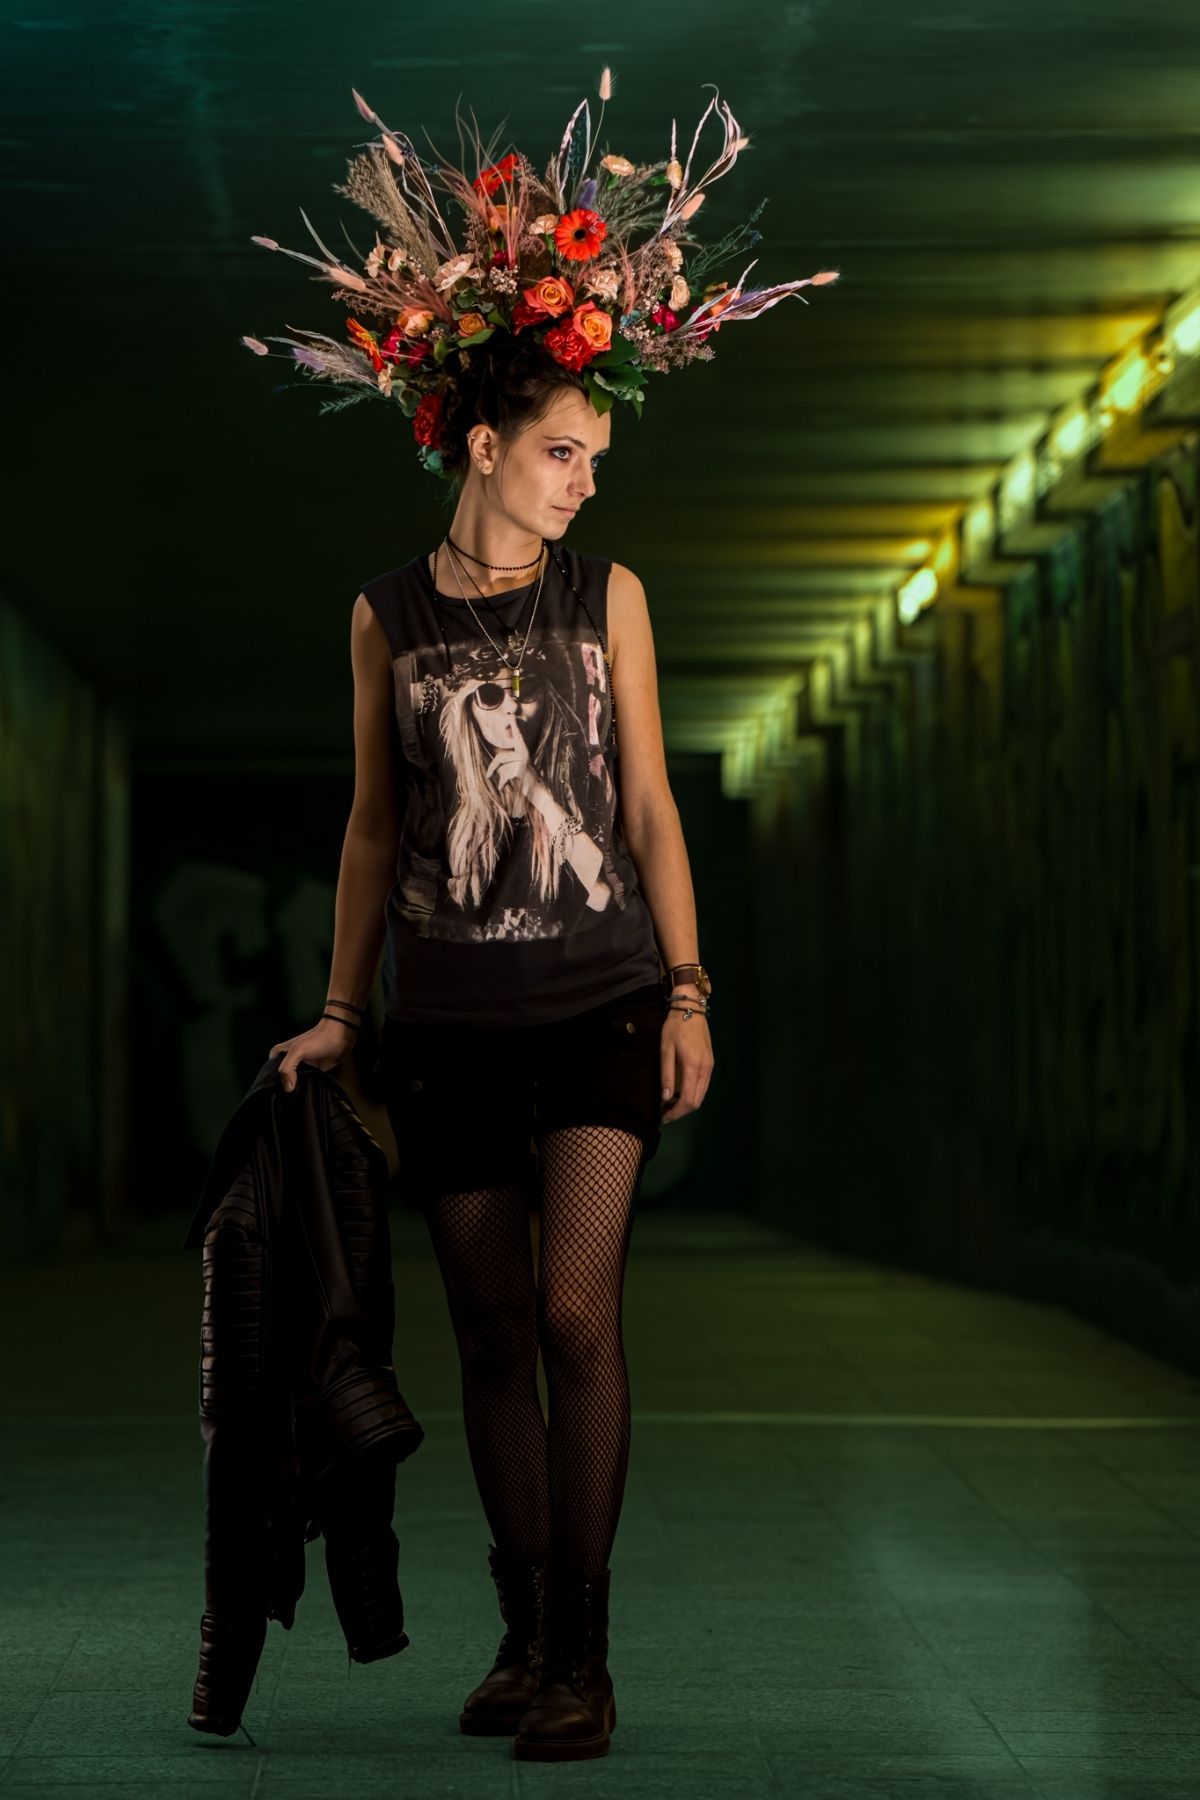 Joanna Kiedacz with Flower Punk Headpiece on Thursd